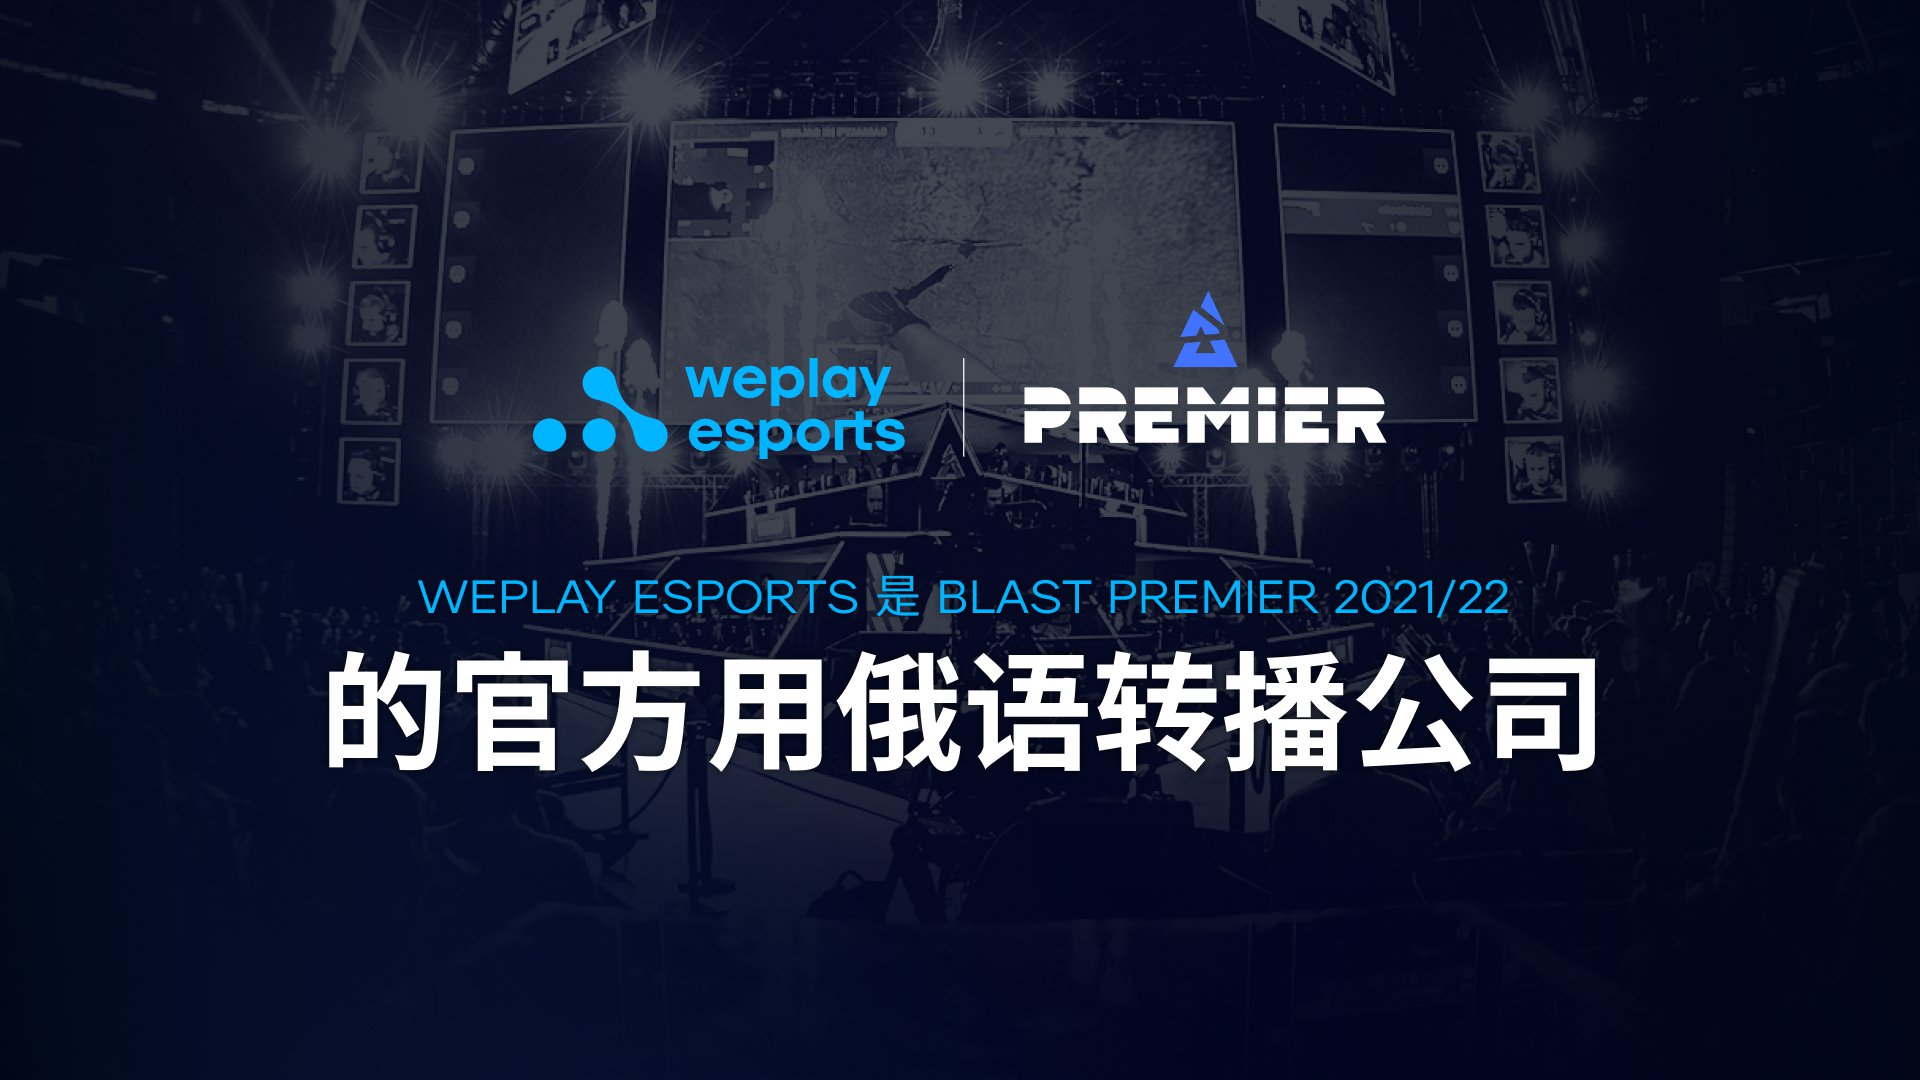 WePlay Esports 是 BLAST Premier 2021/22 的官方用俄语转播公司。图片：: WePlay Holding